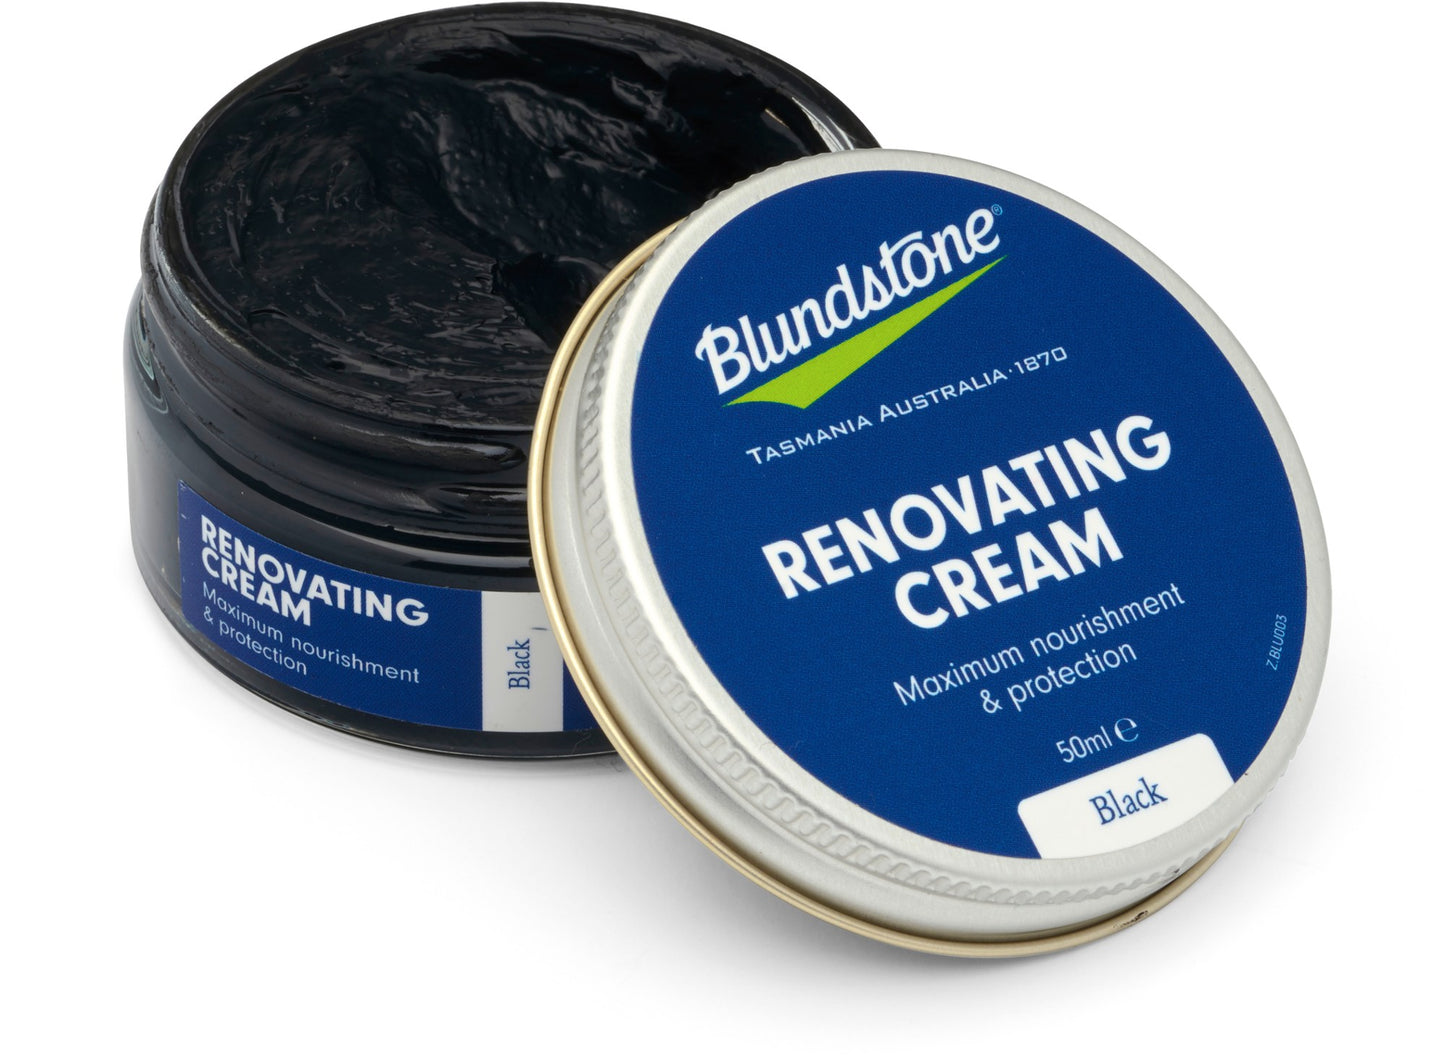 Blundstone Renovating Cream - Black